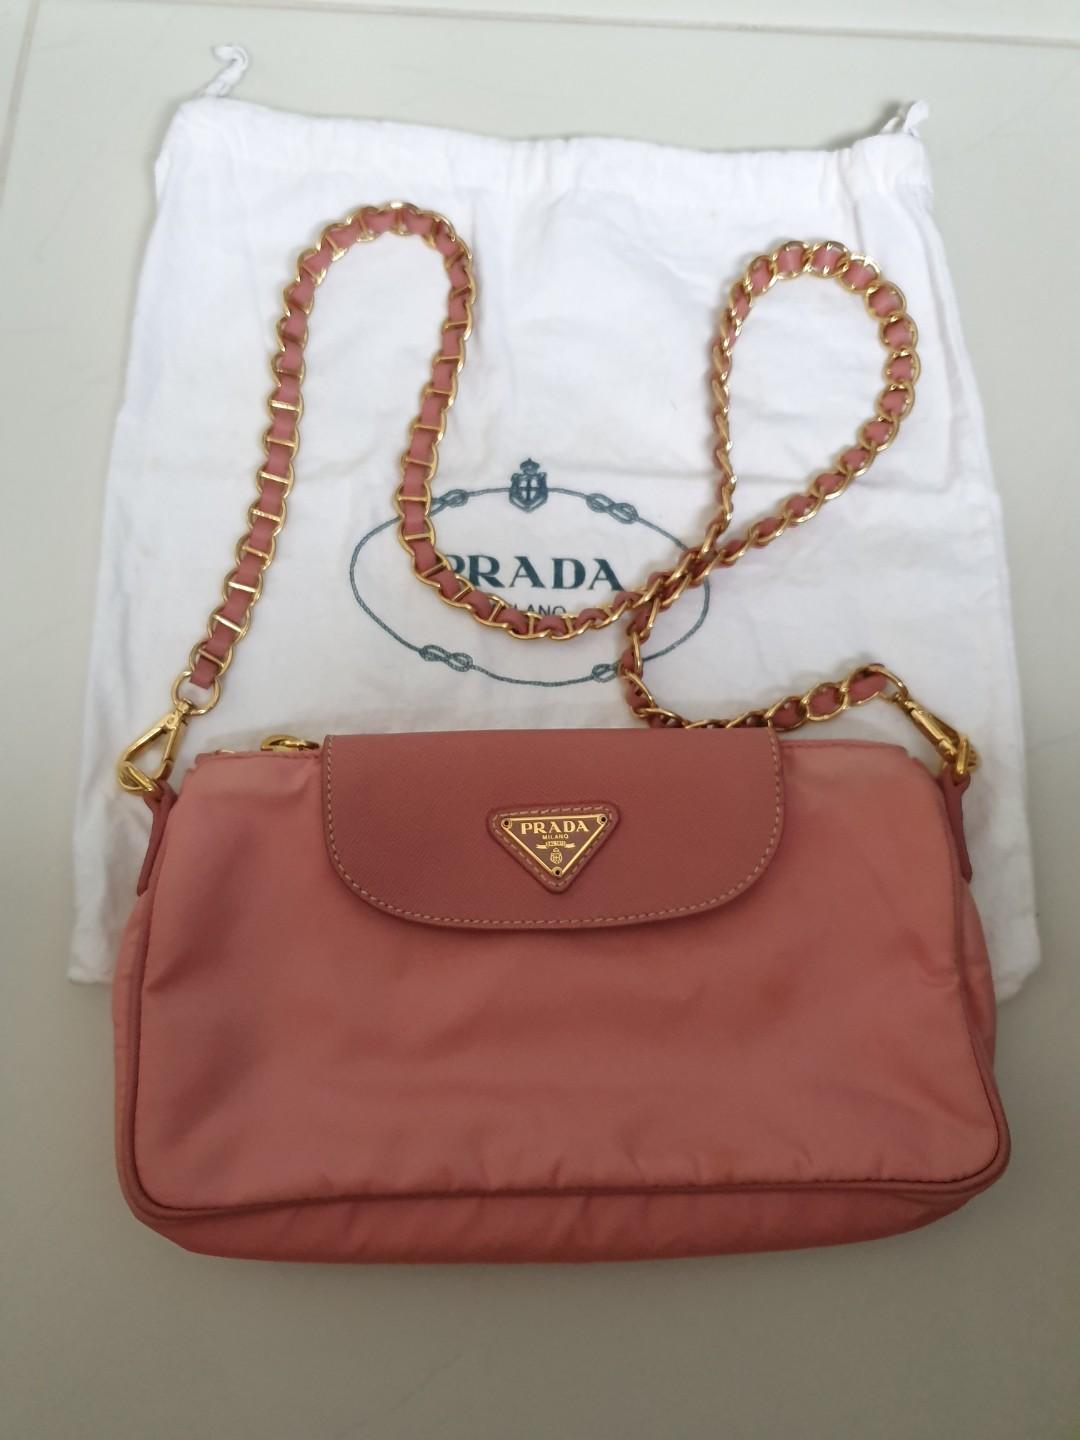 prada chain sling bag